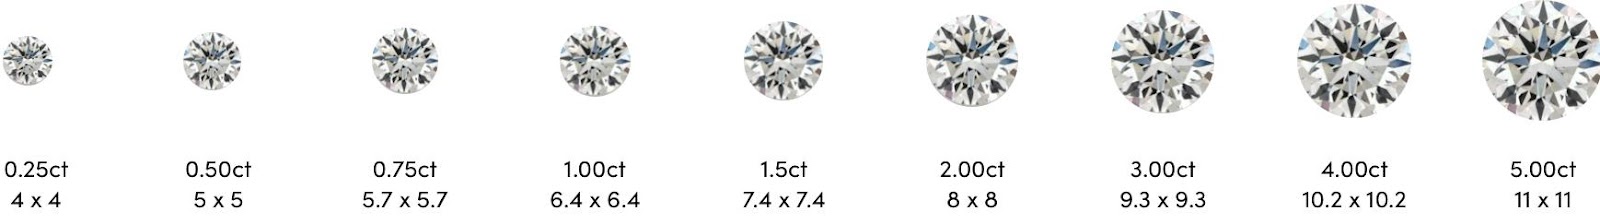 carat of diamonds